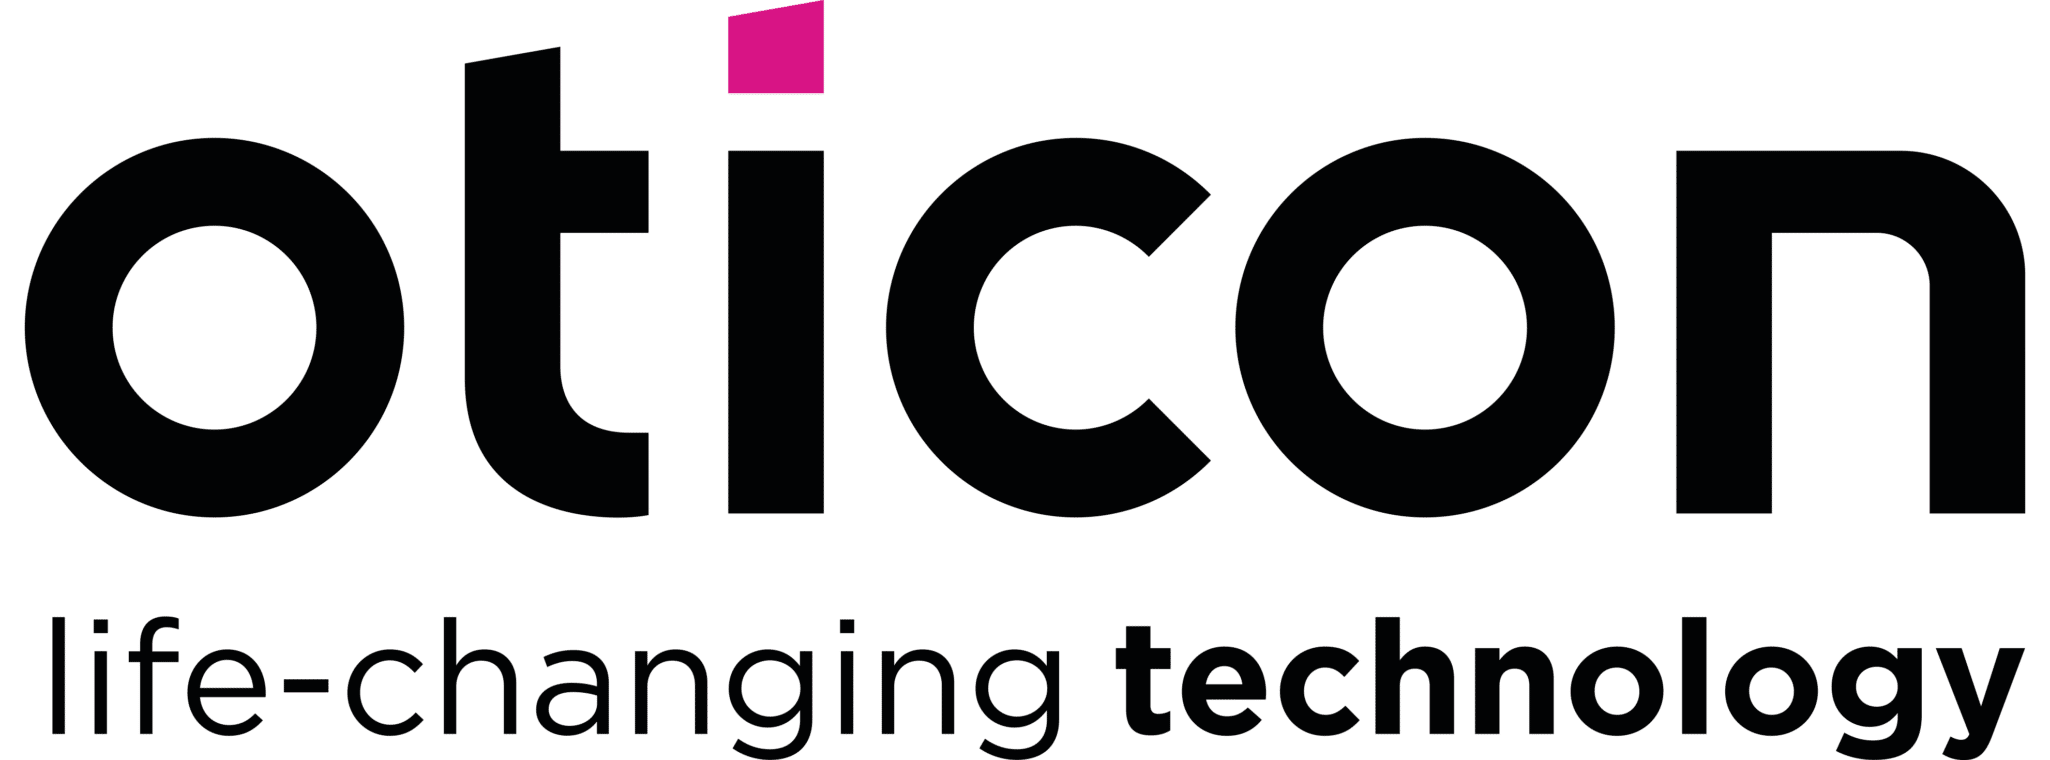 oticon logo lct 100mm rgb pos download